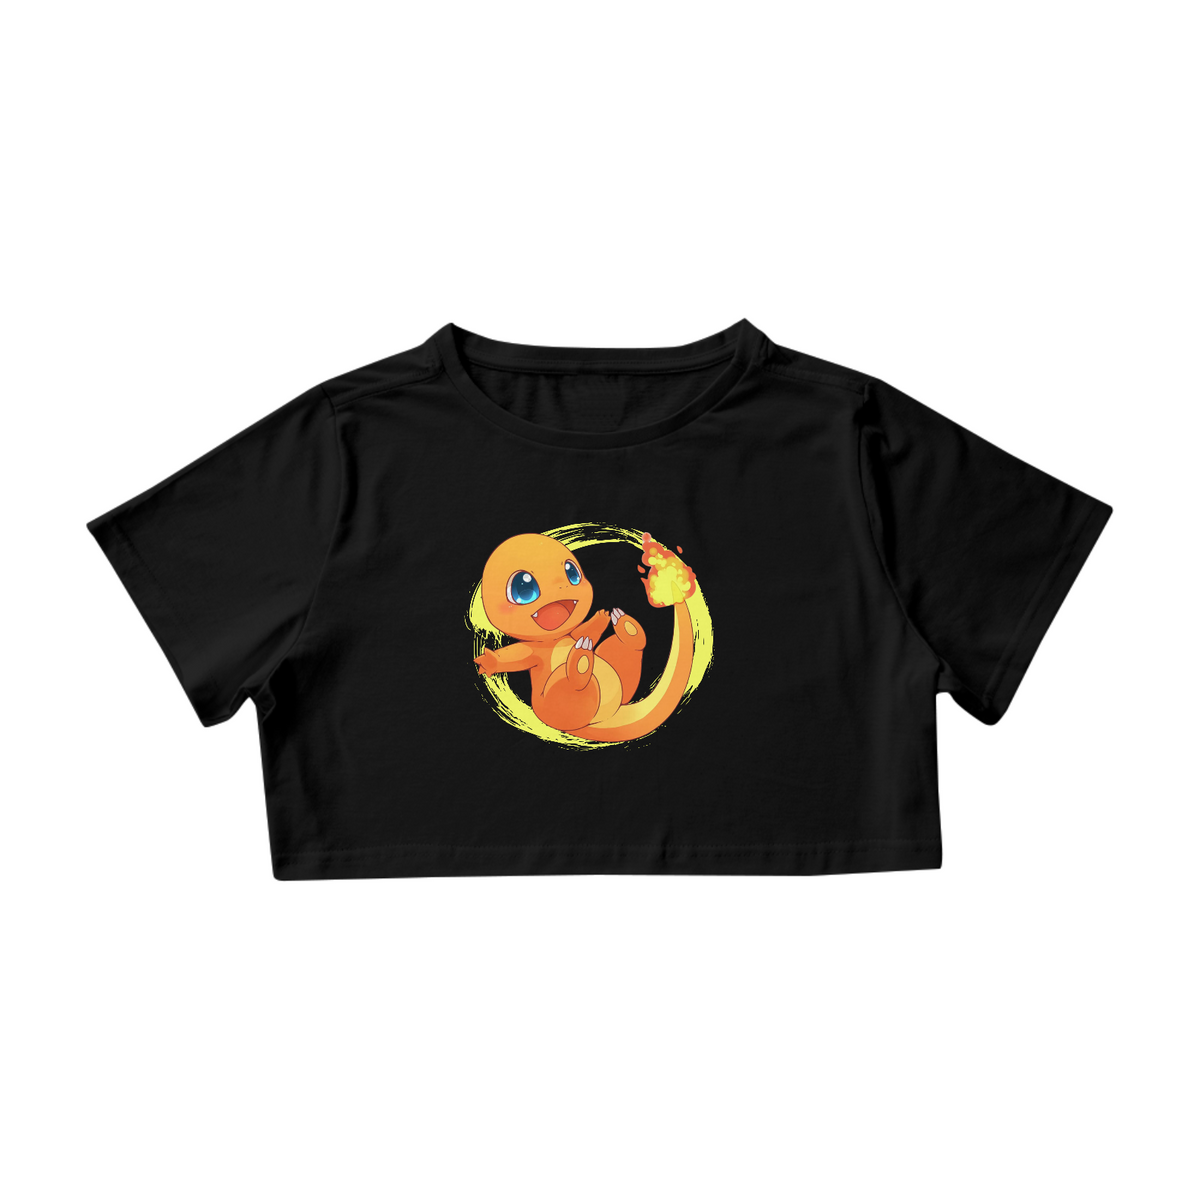 Nome do produto: Camiseta Charmander - Pokemon Edition - Croppet